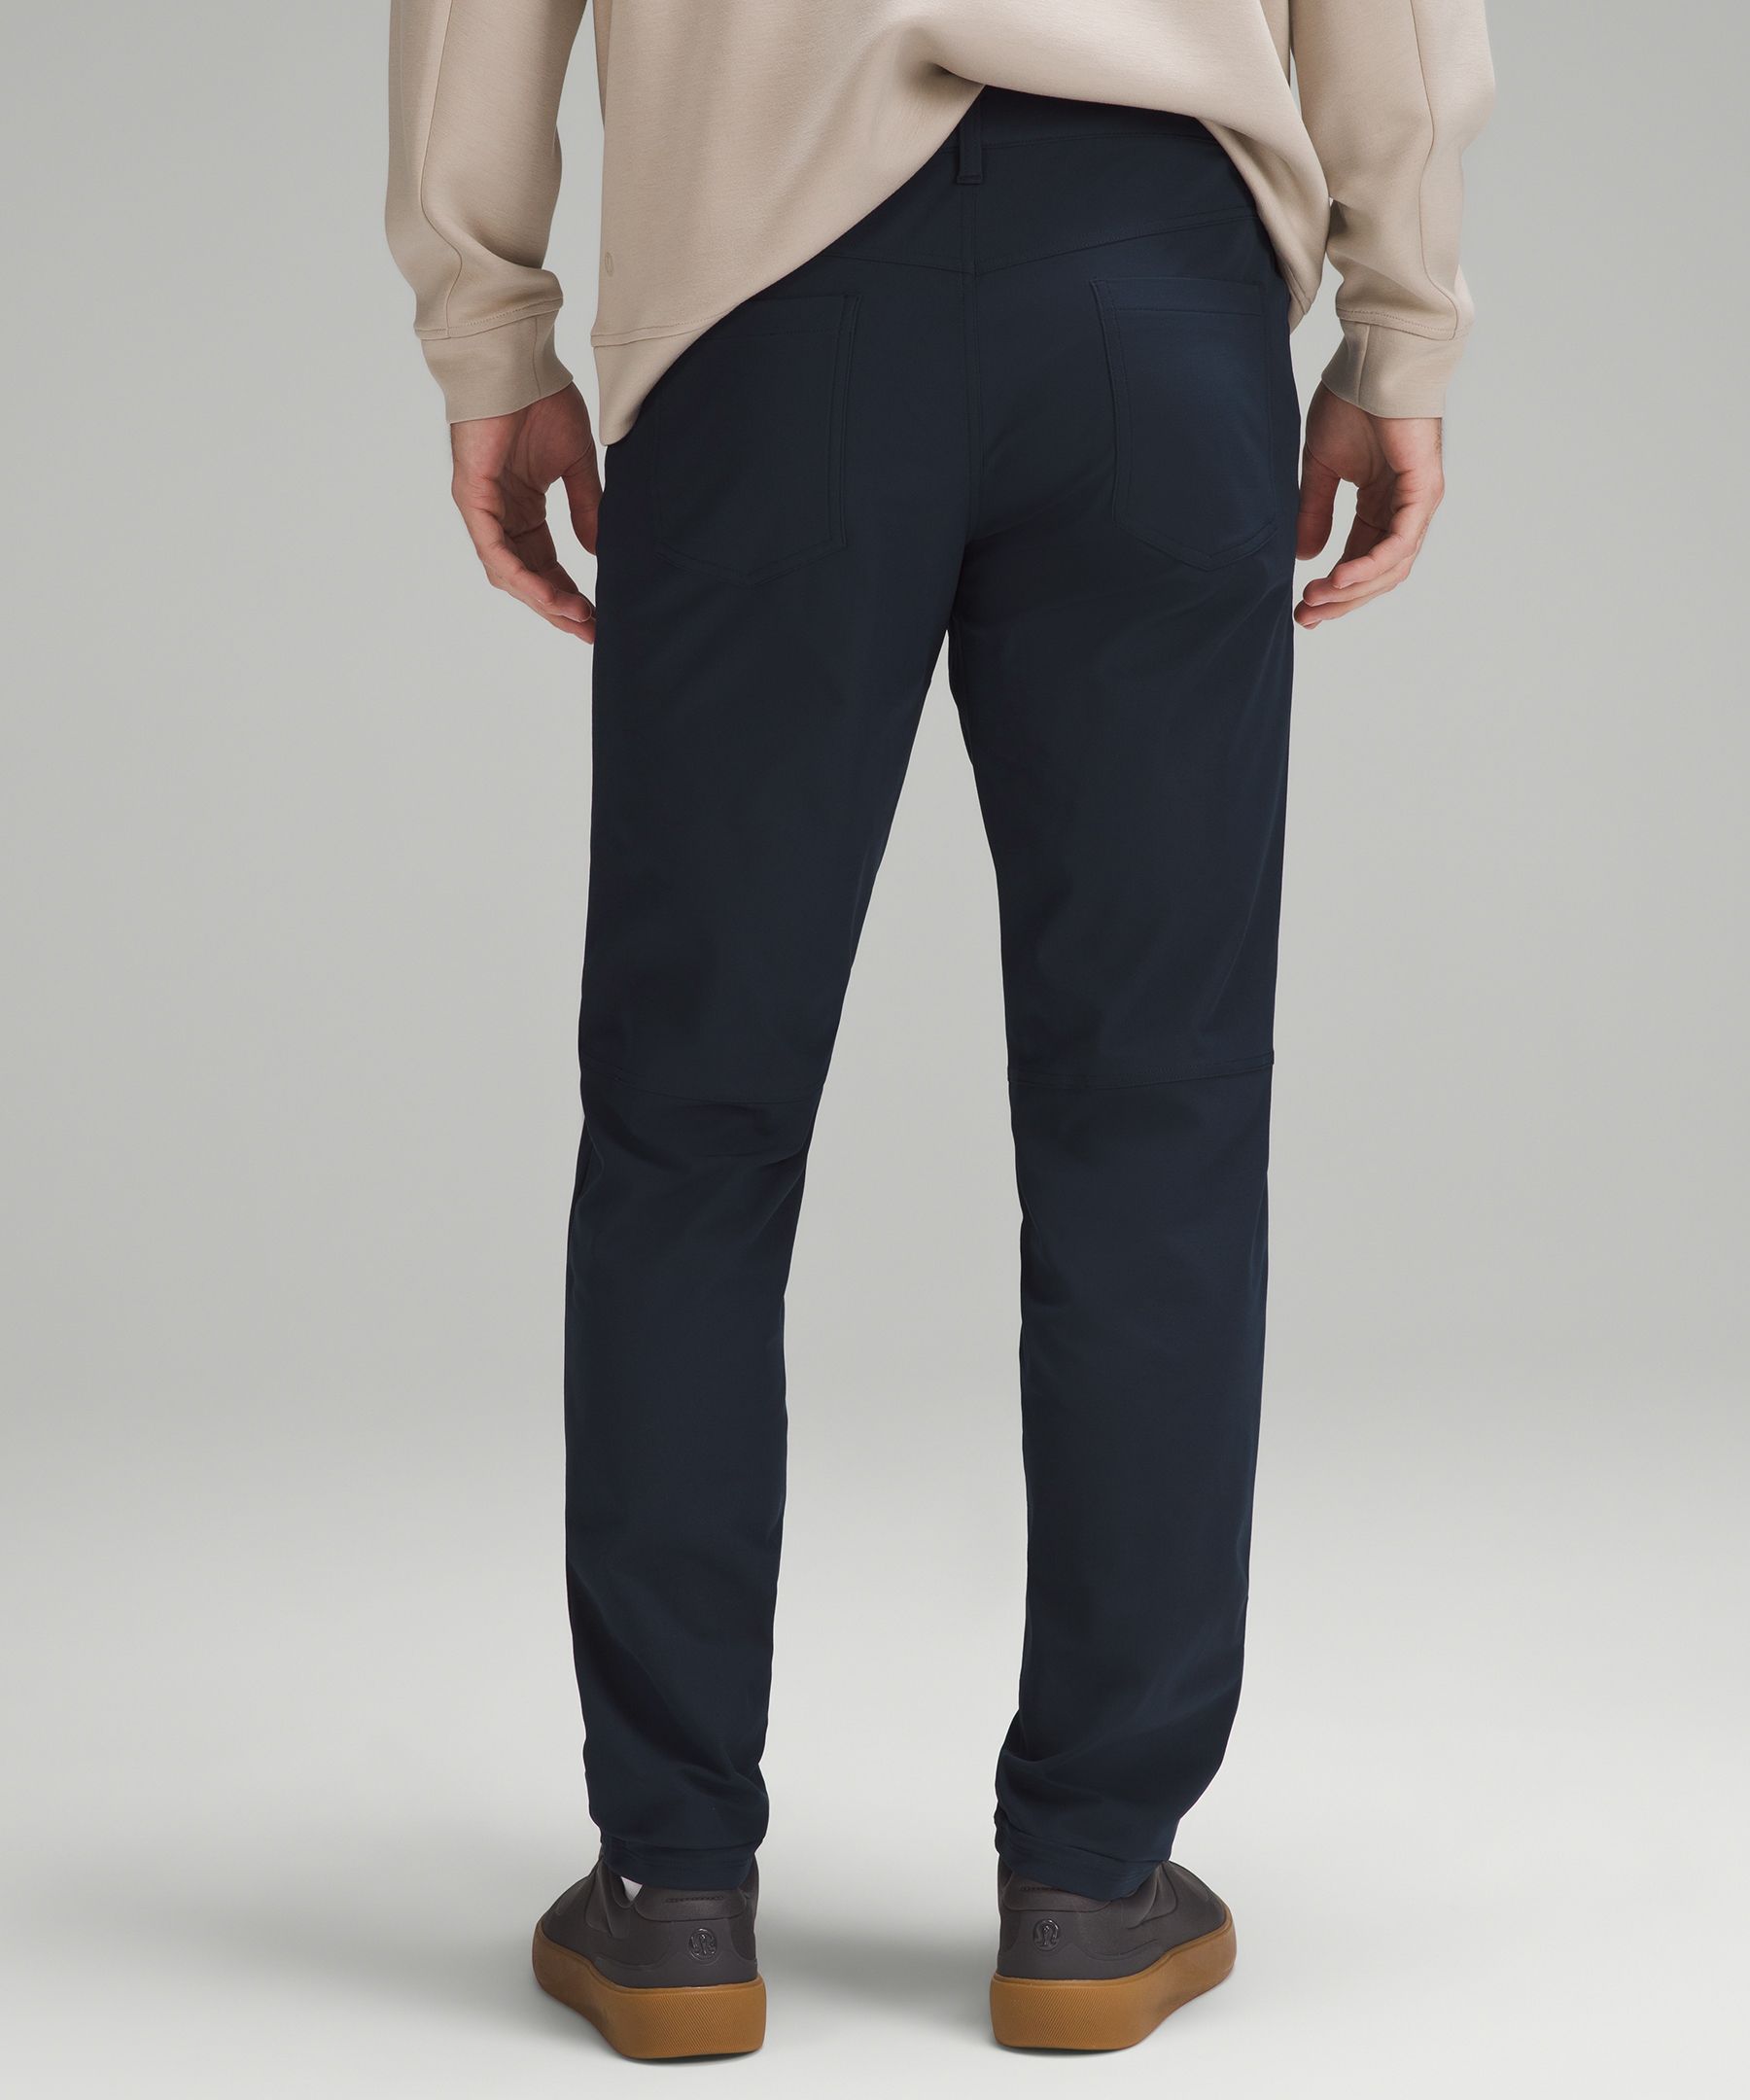 LULULEMON ABC Dress Pants Men's 36 x 28 Inseam Black - Wear to